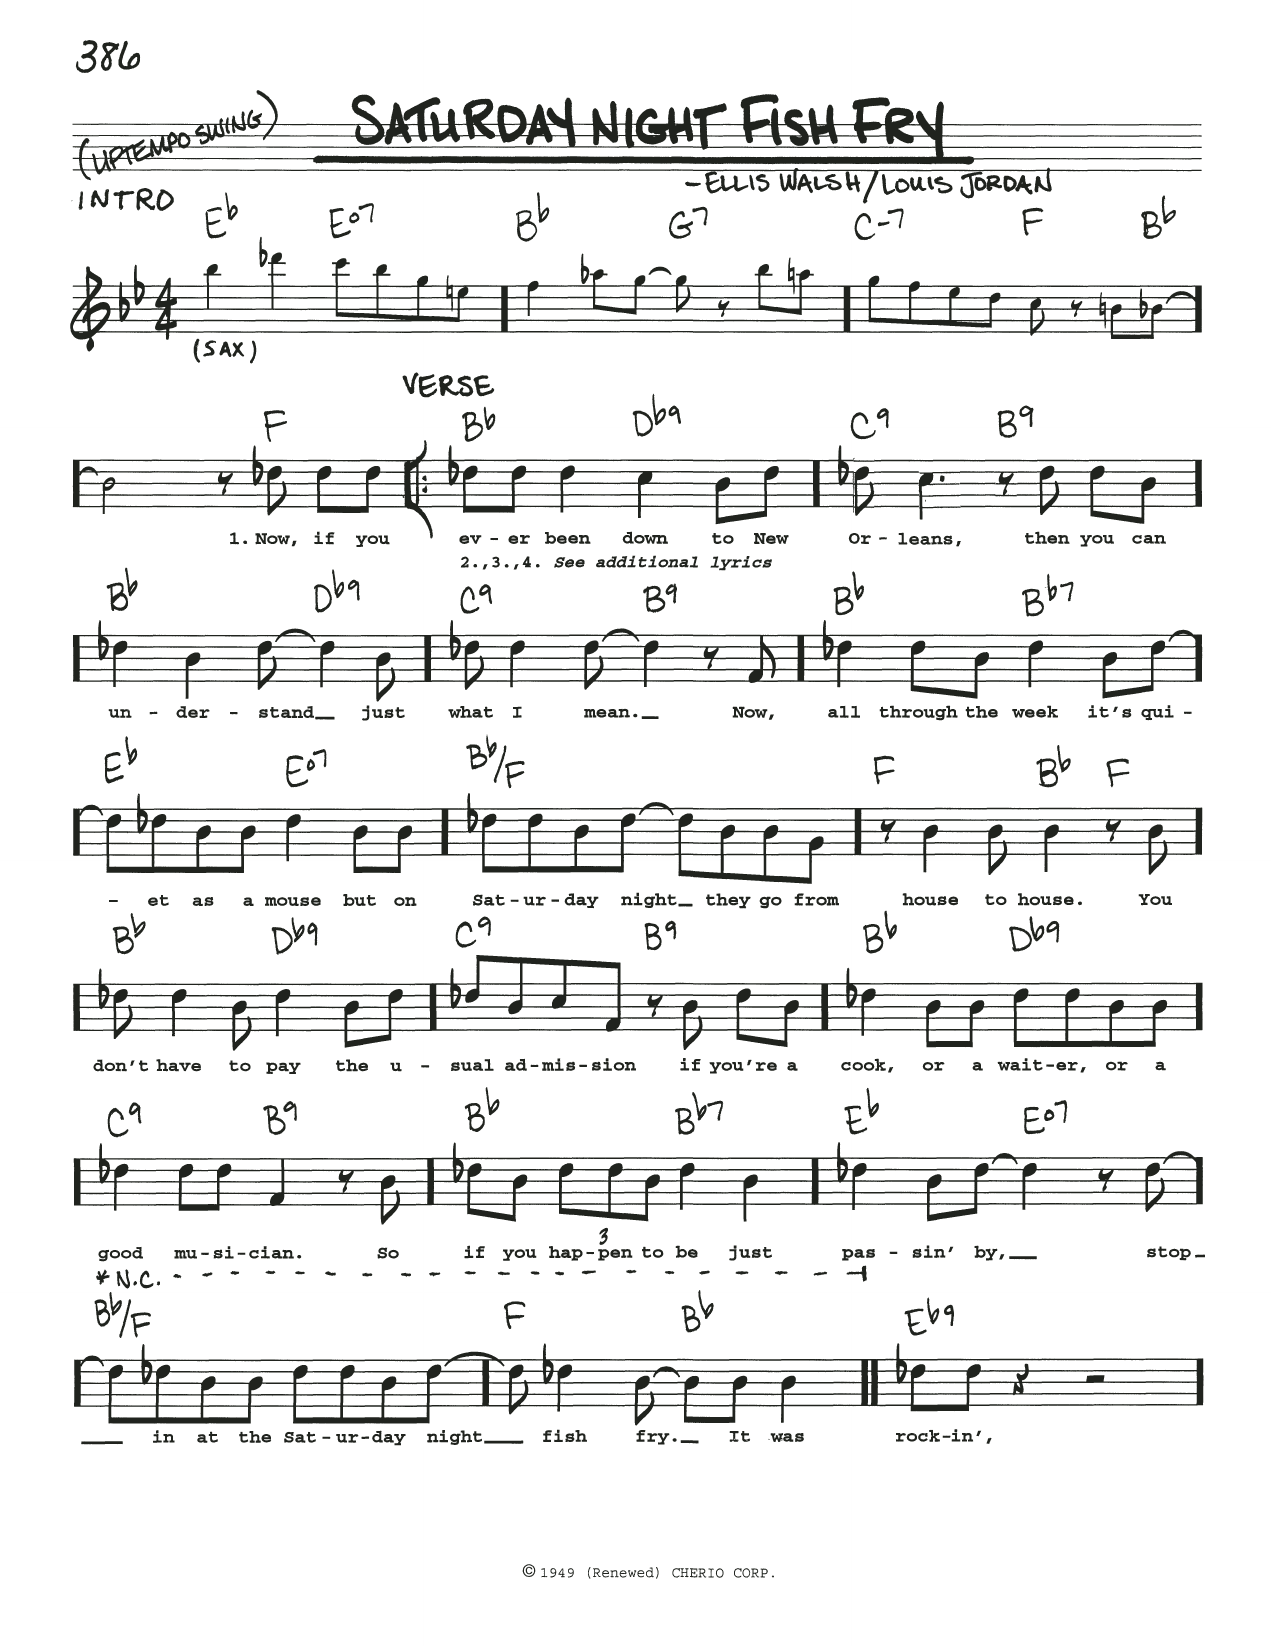 Ellis Walsh Saturday Night Fish Fry Sheet Music Notes & Chords for Real Book – Melody, Lyrics & Chords - Download or Print PDF